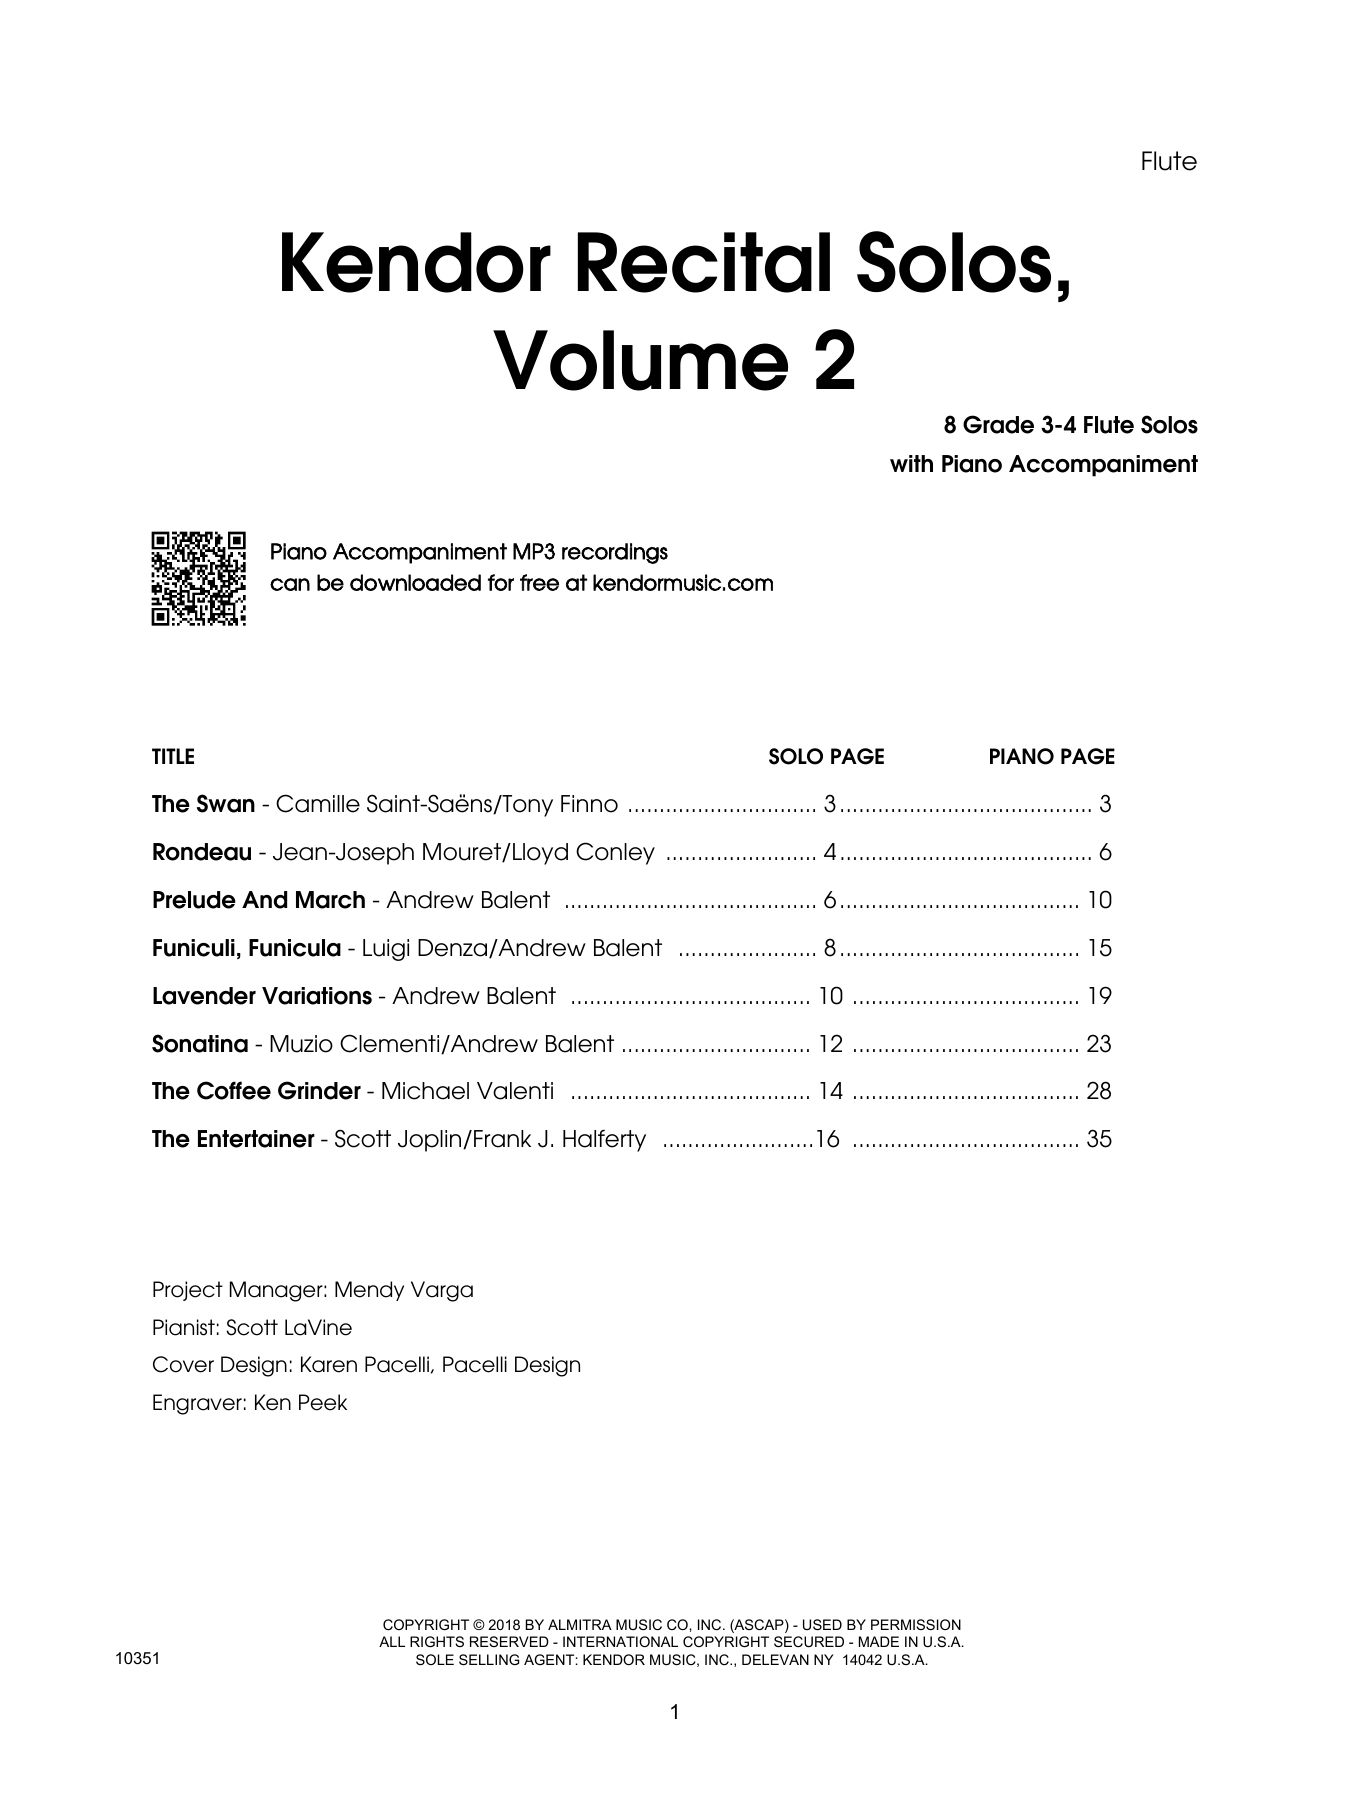 Download Various Kendor Recital Solos, Volume 2 - Flute Sheet Music